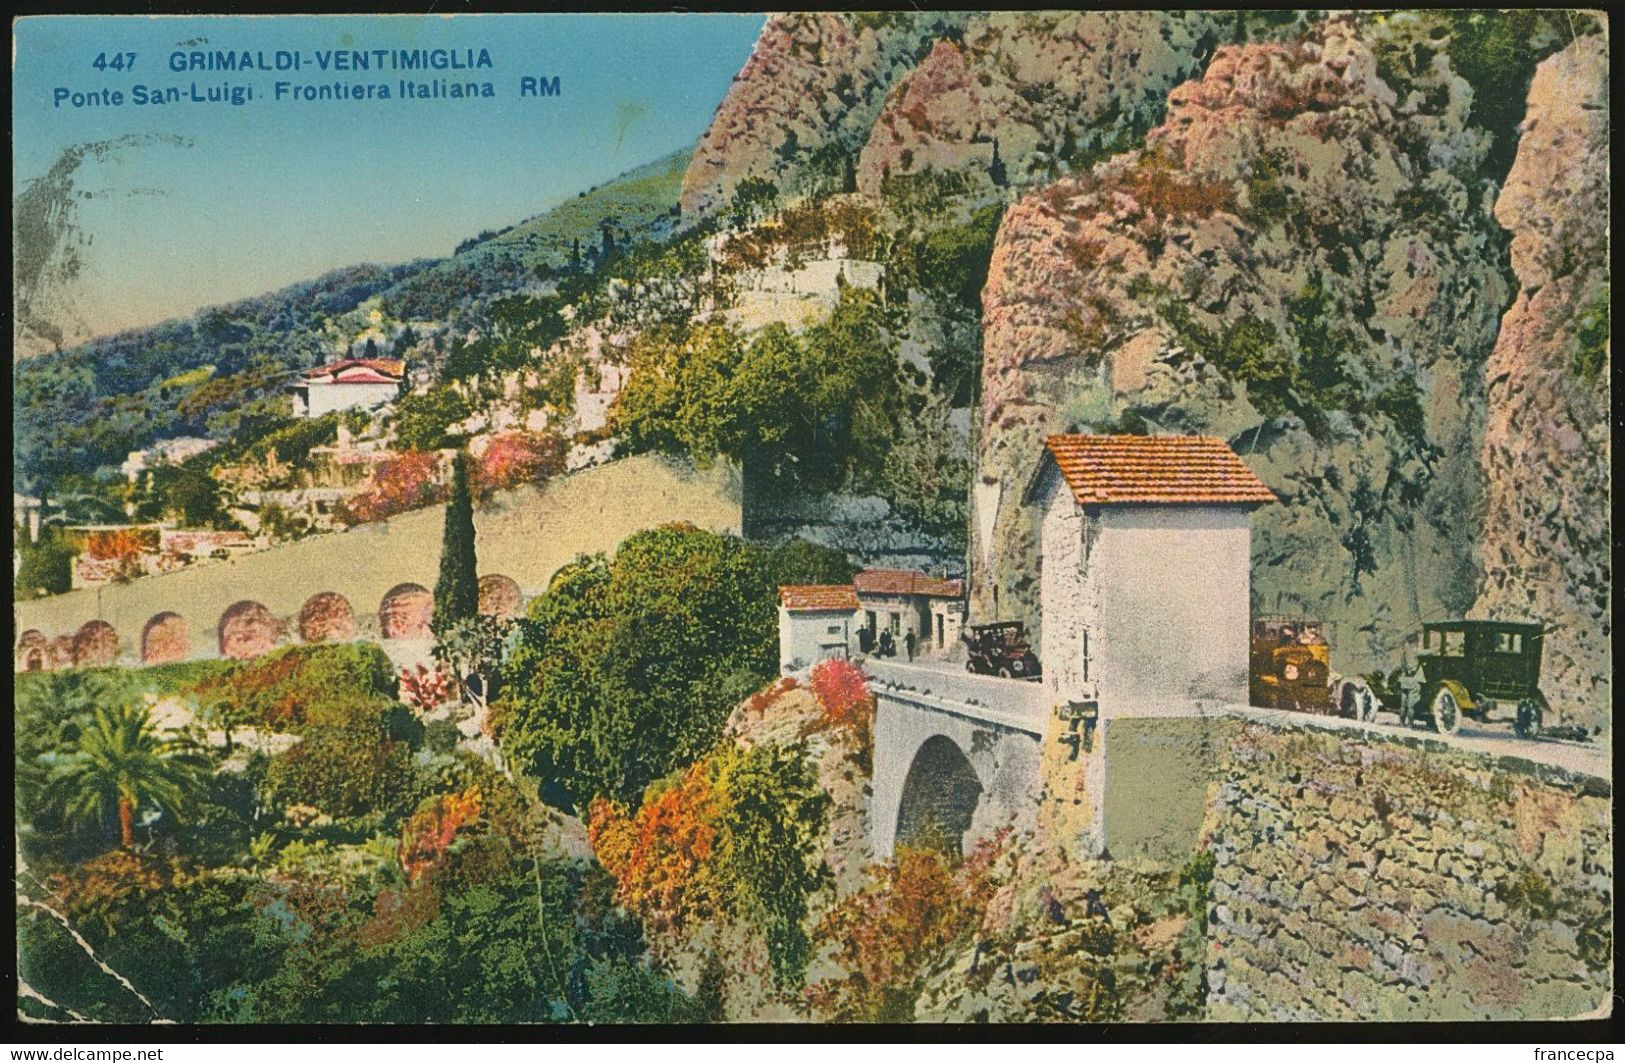 11339 - GRIMALDI-VENTIMIGLIA - Pont San-Luigi - Frontière Italiana - Douane